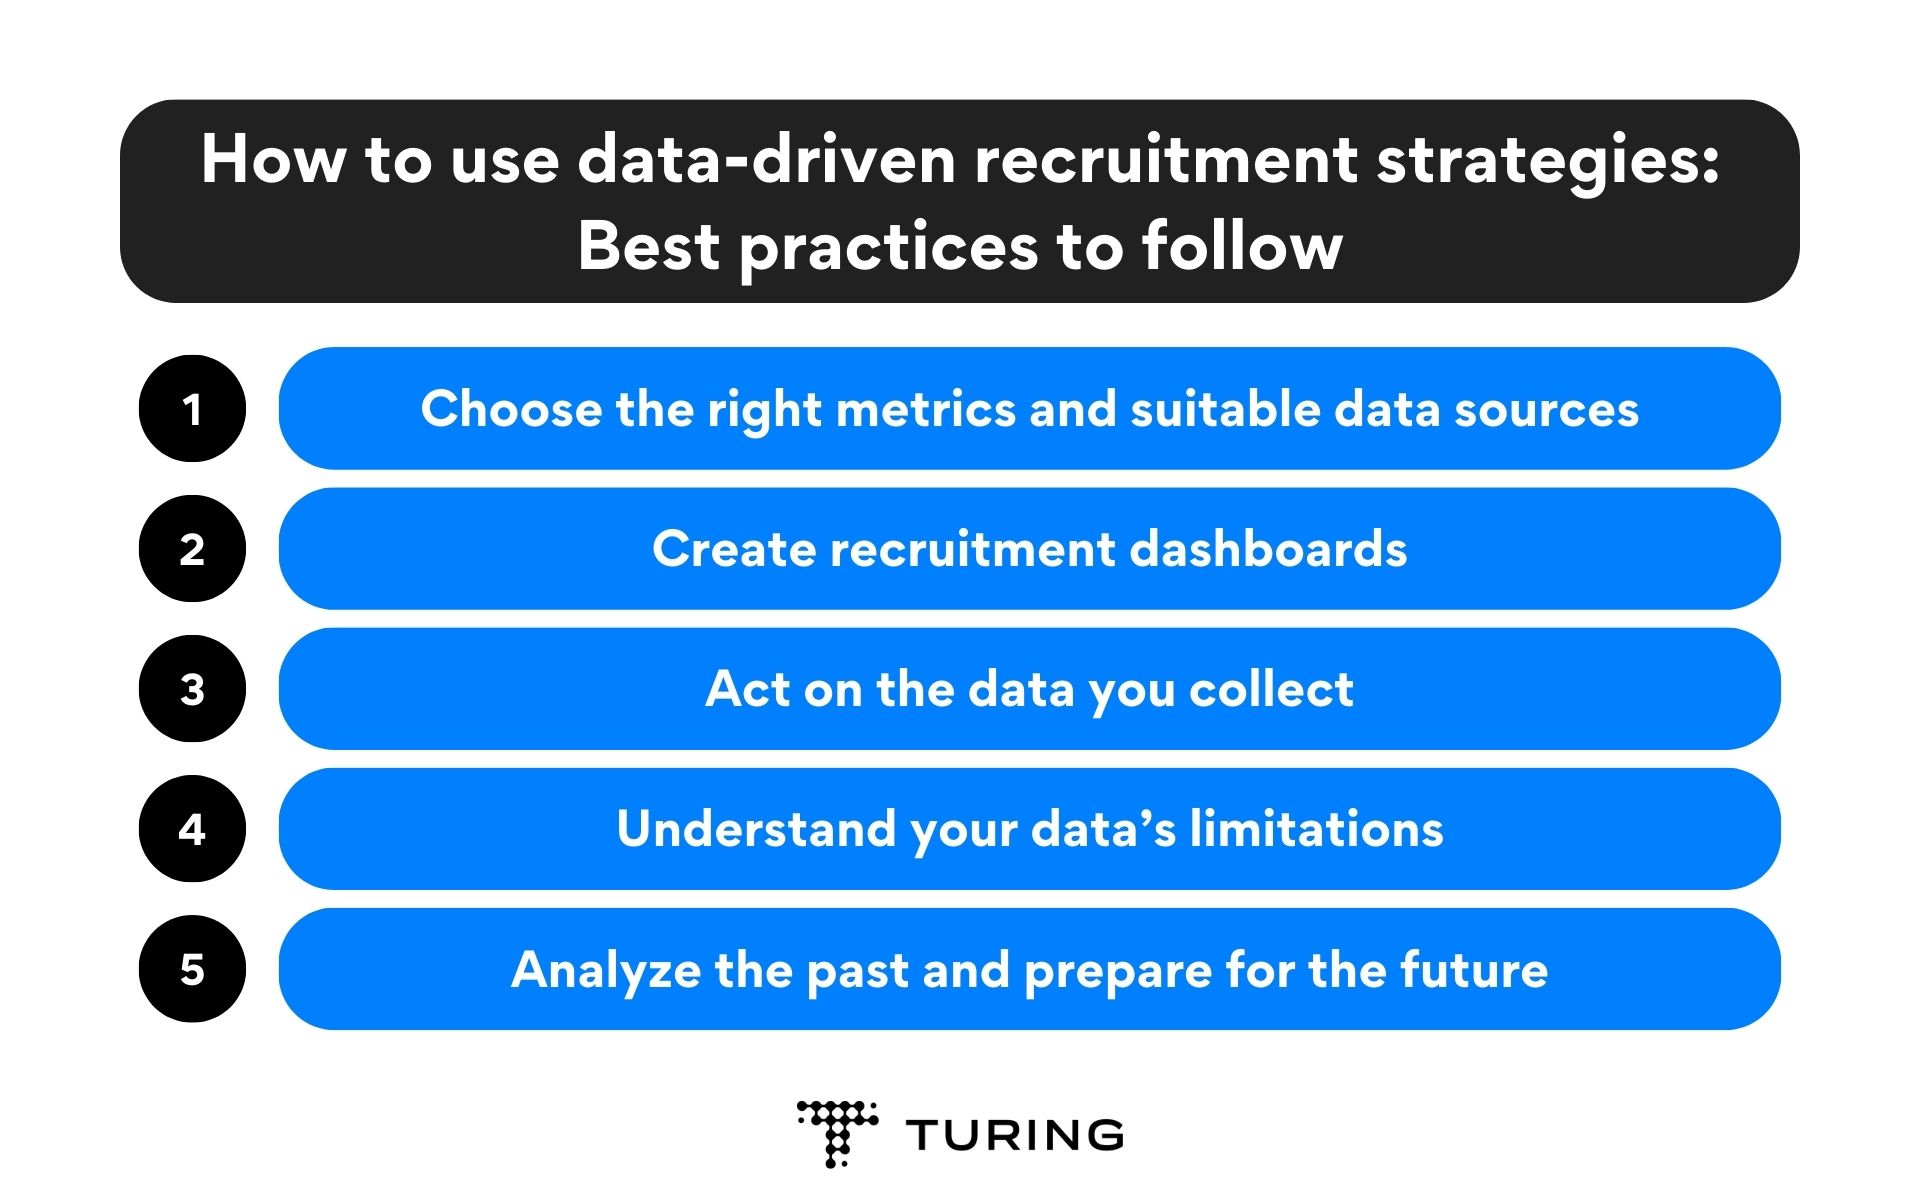 Data-driven recruitment: How to use data-driven recruitment strategies?